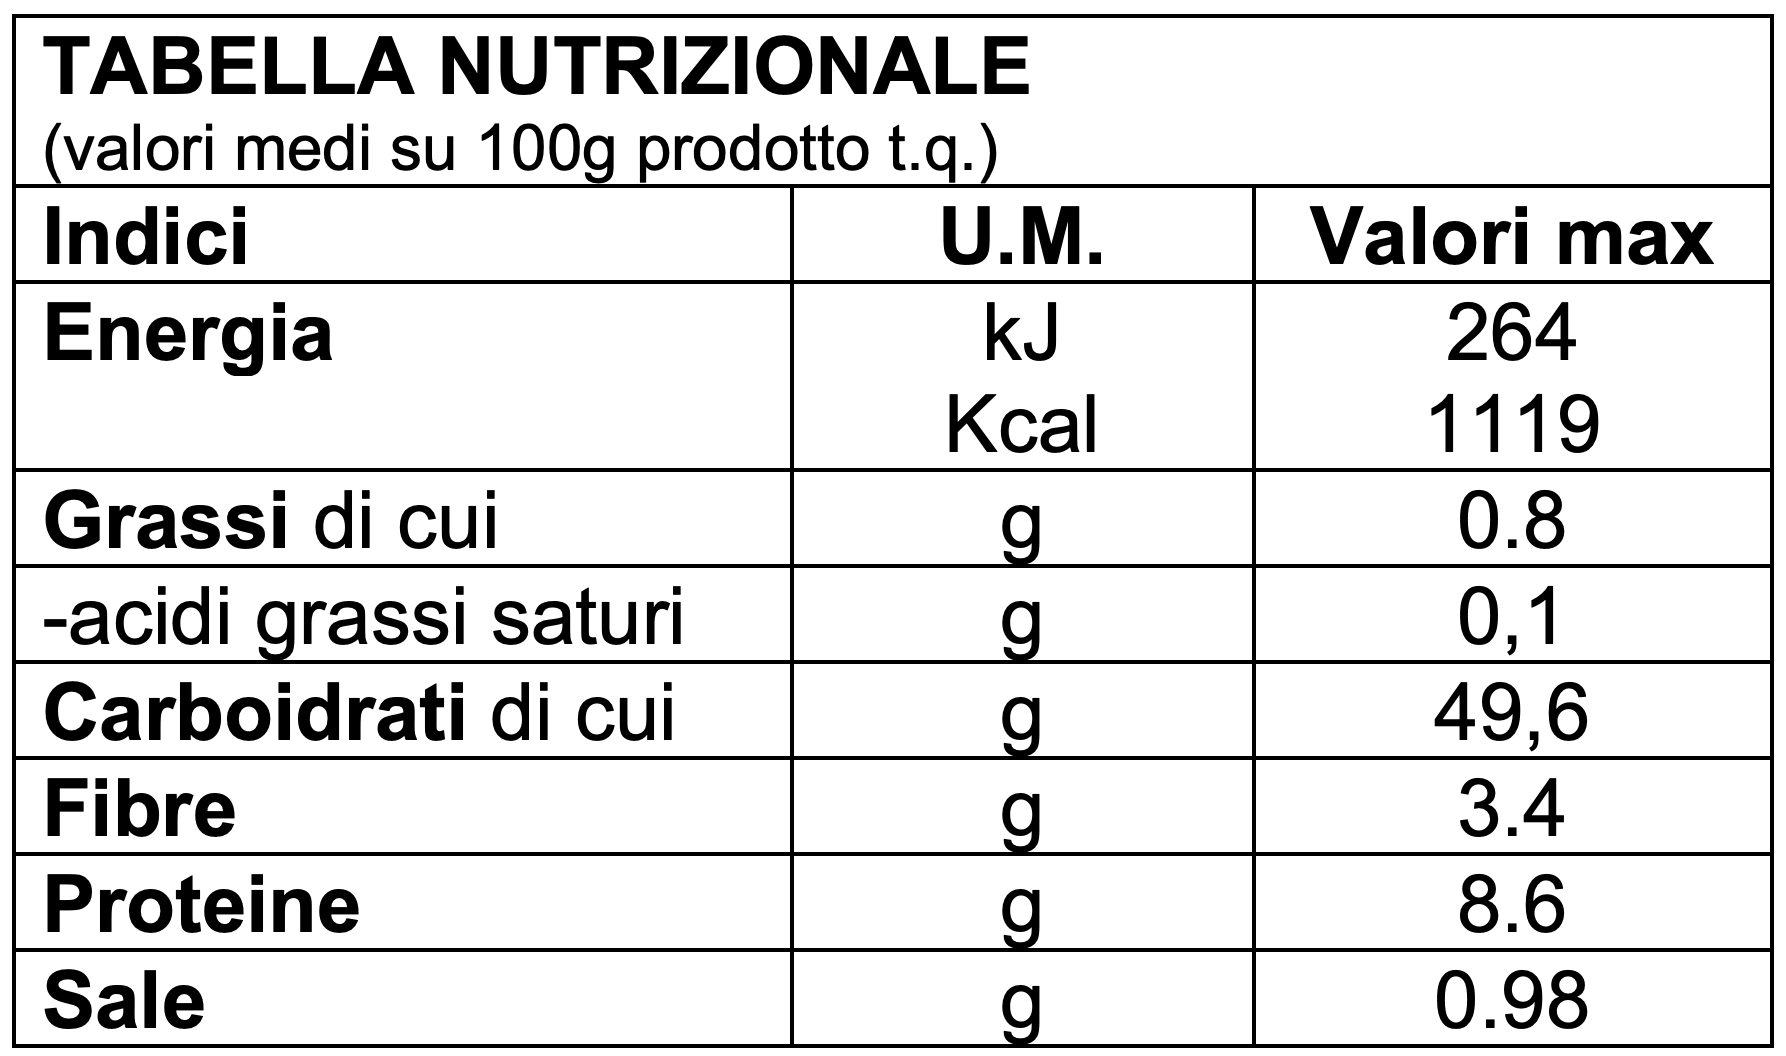 https://www.panem.it/wp-content/uploads/2019/12/tabella-nutrizionale-buoni-giorni-pugliese.png